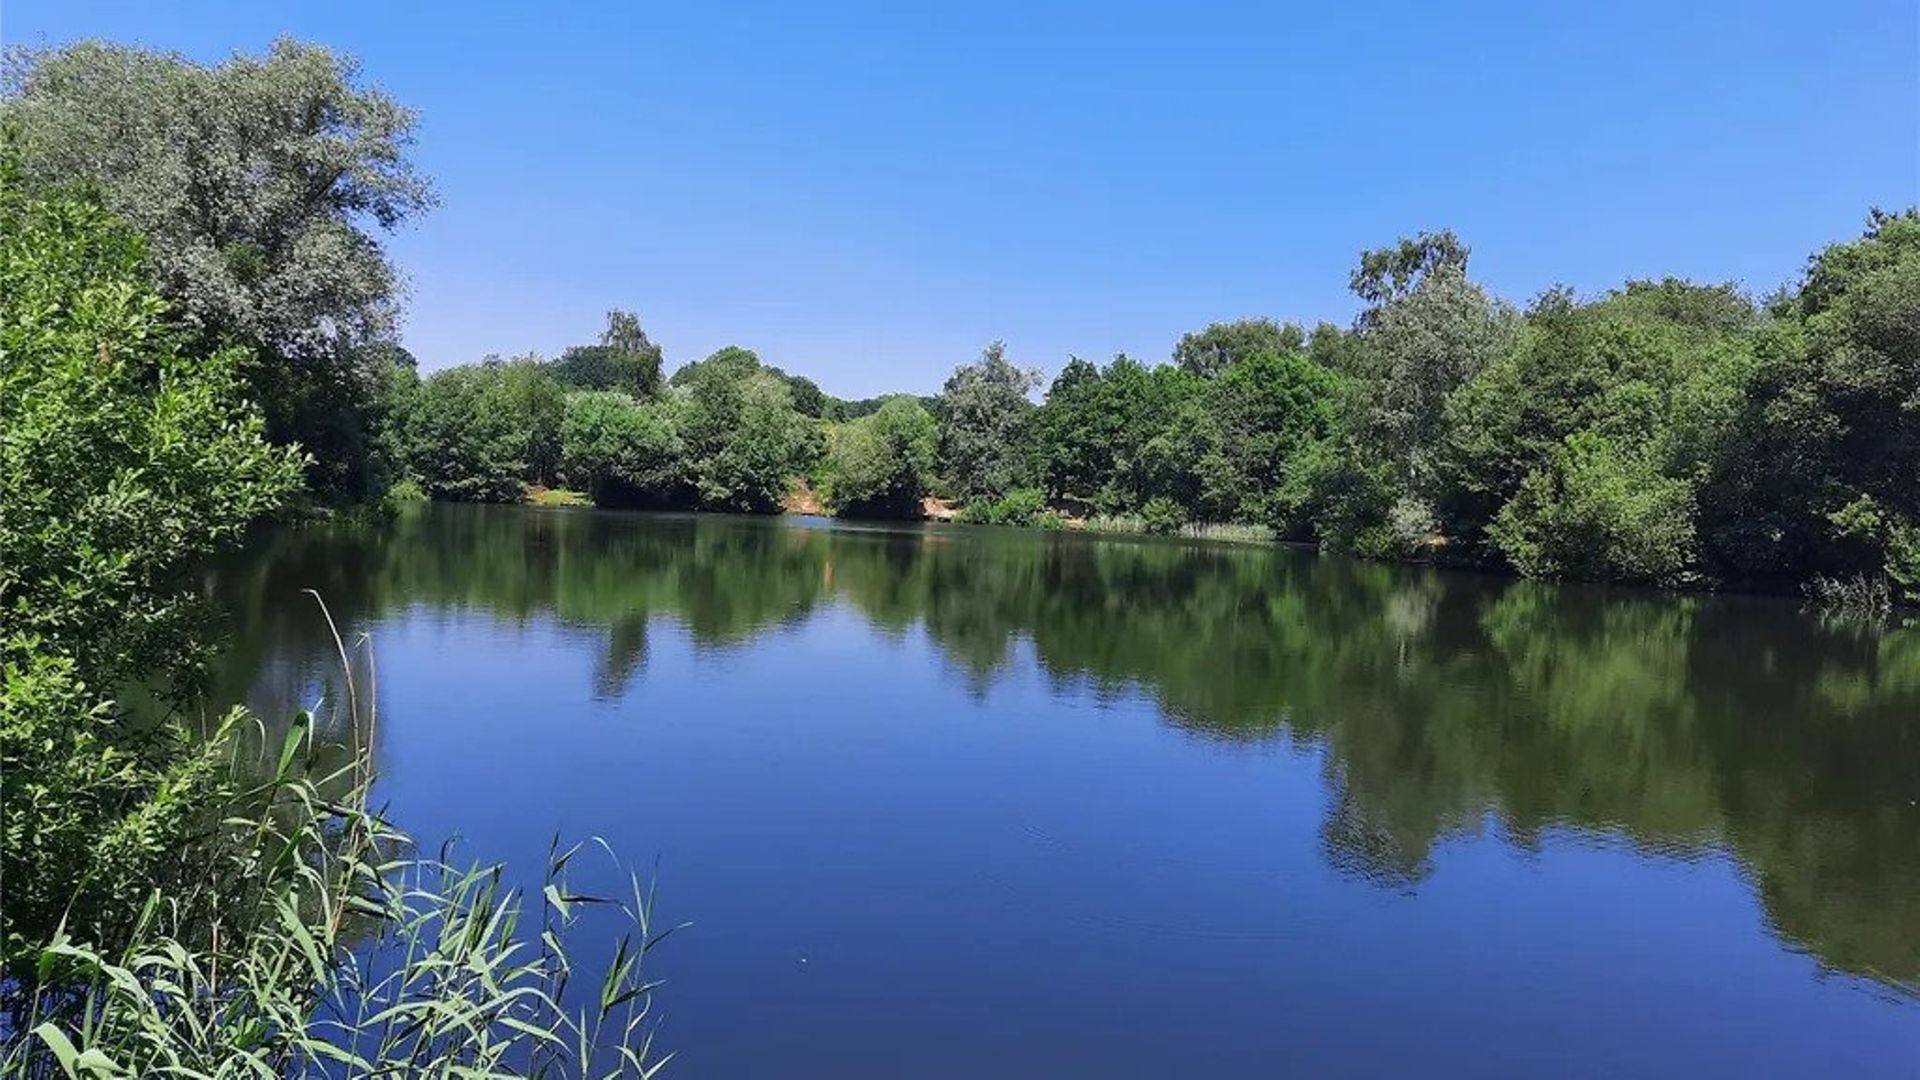 Popular dog walking spot and fishing lake for sale